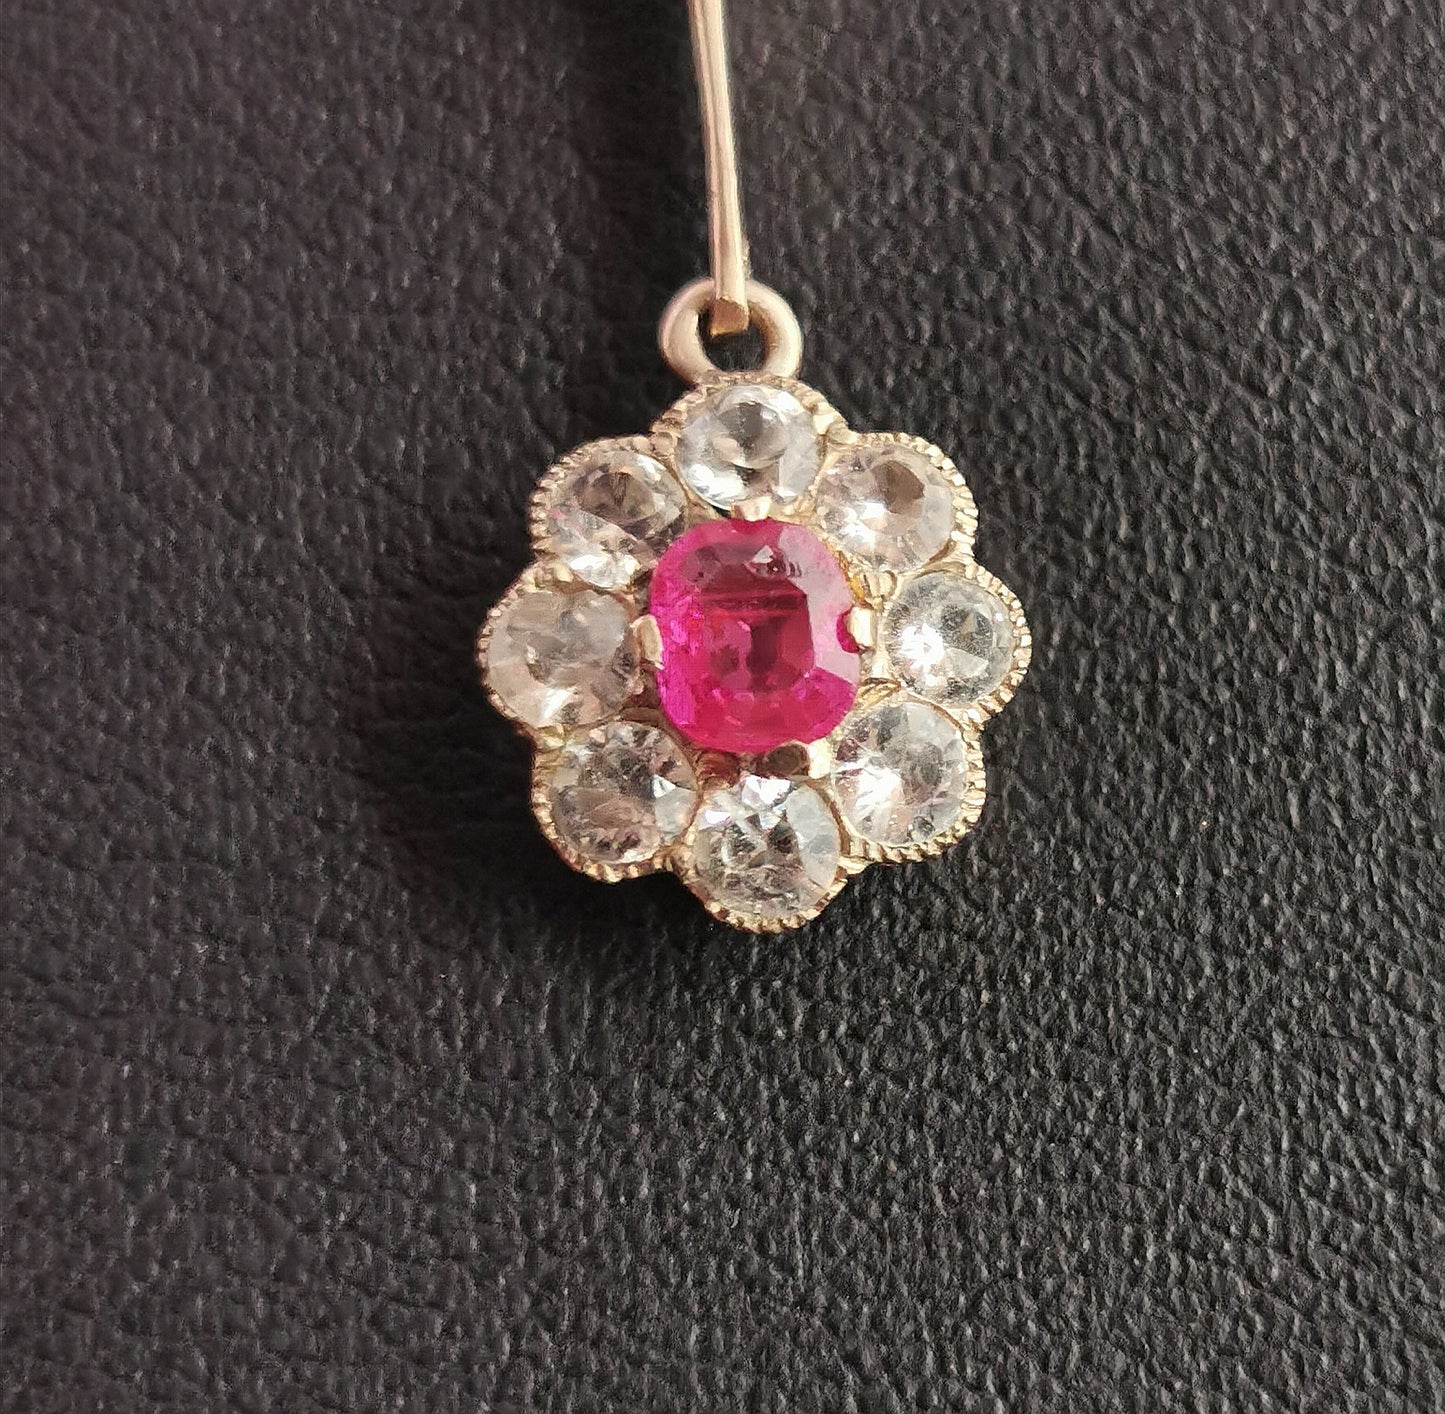 Antique Ruby and Zircon drop pendant, floral